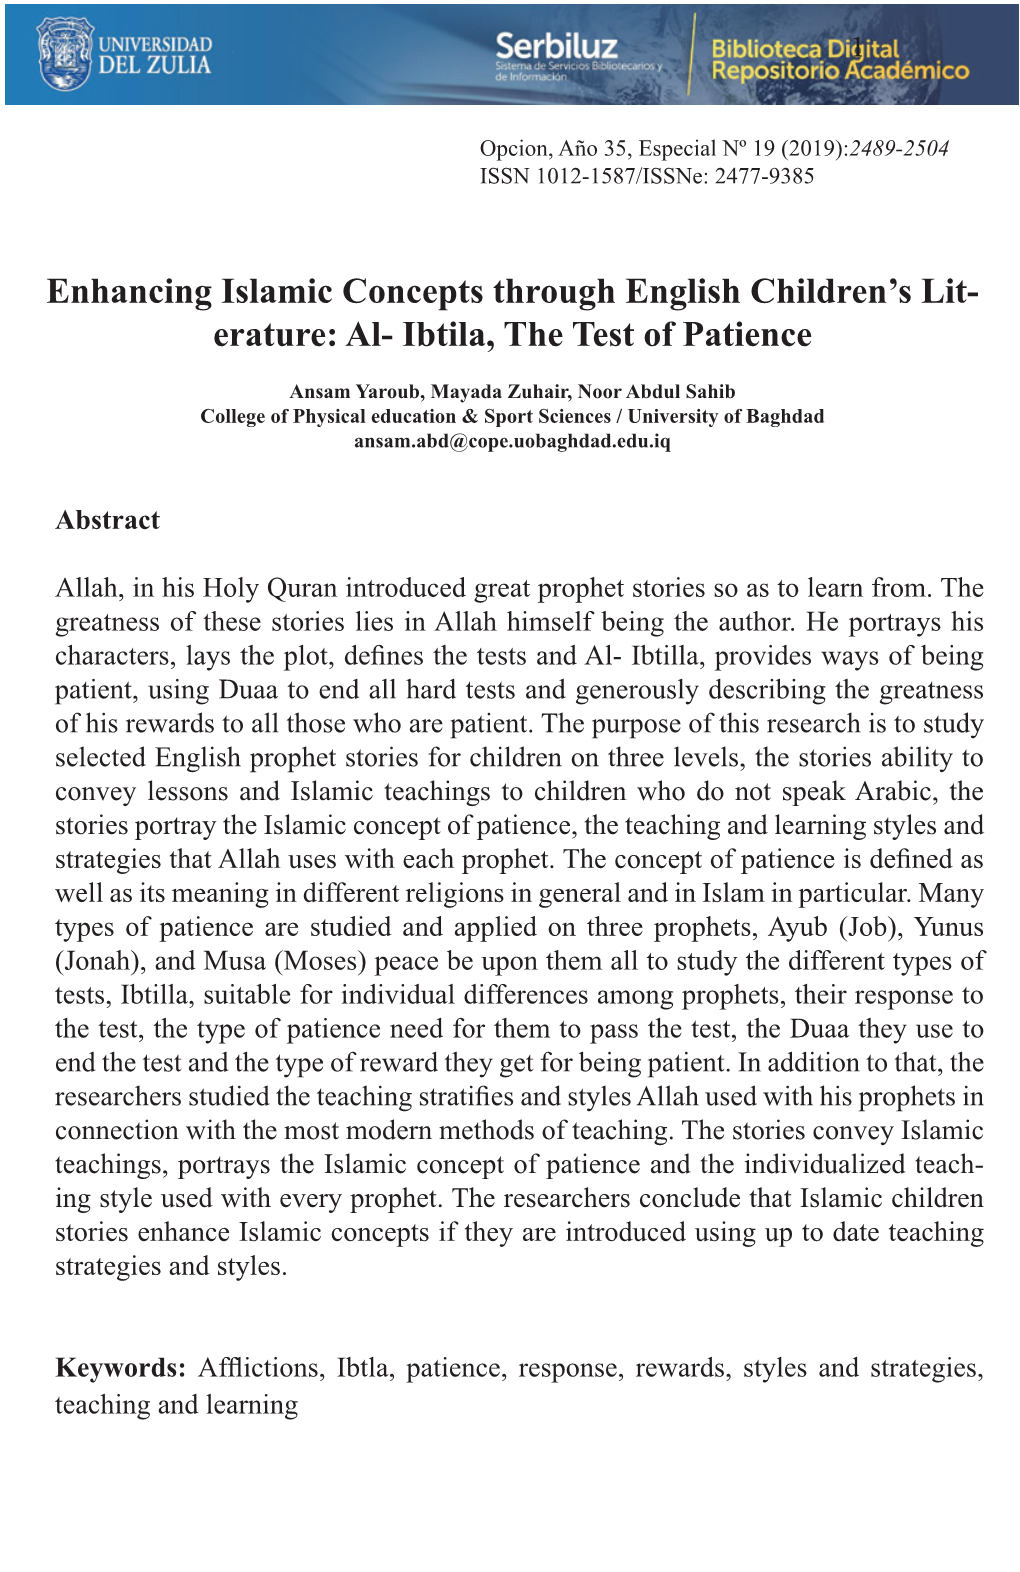 Enhancing Islamic Concepts Through English Children's Lit- Erature: Al